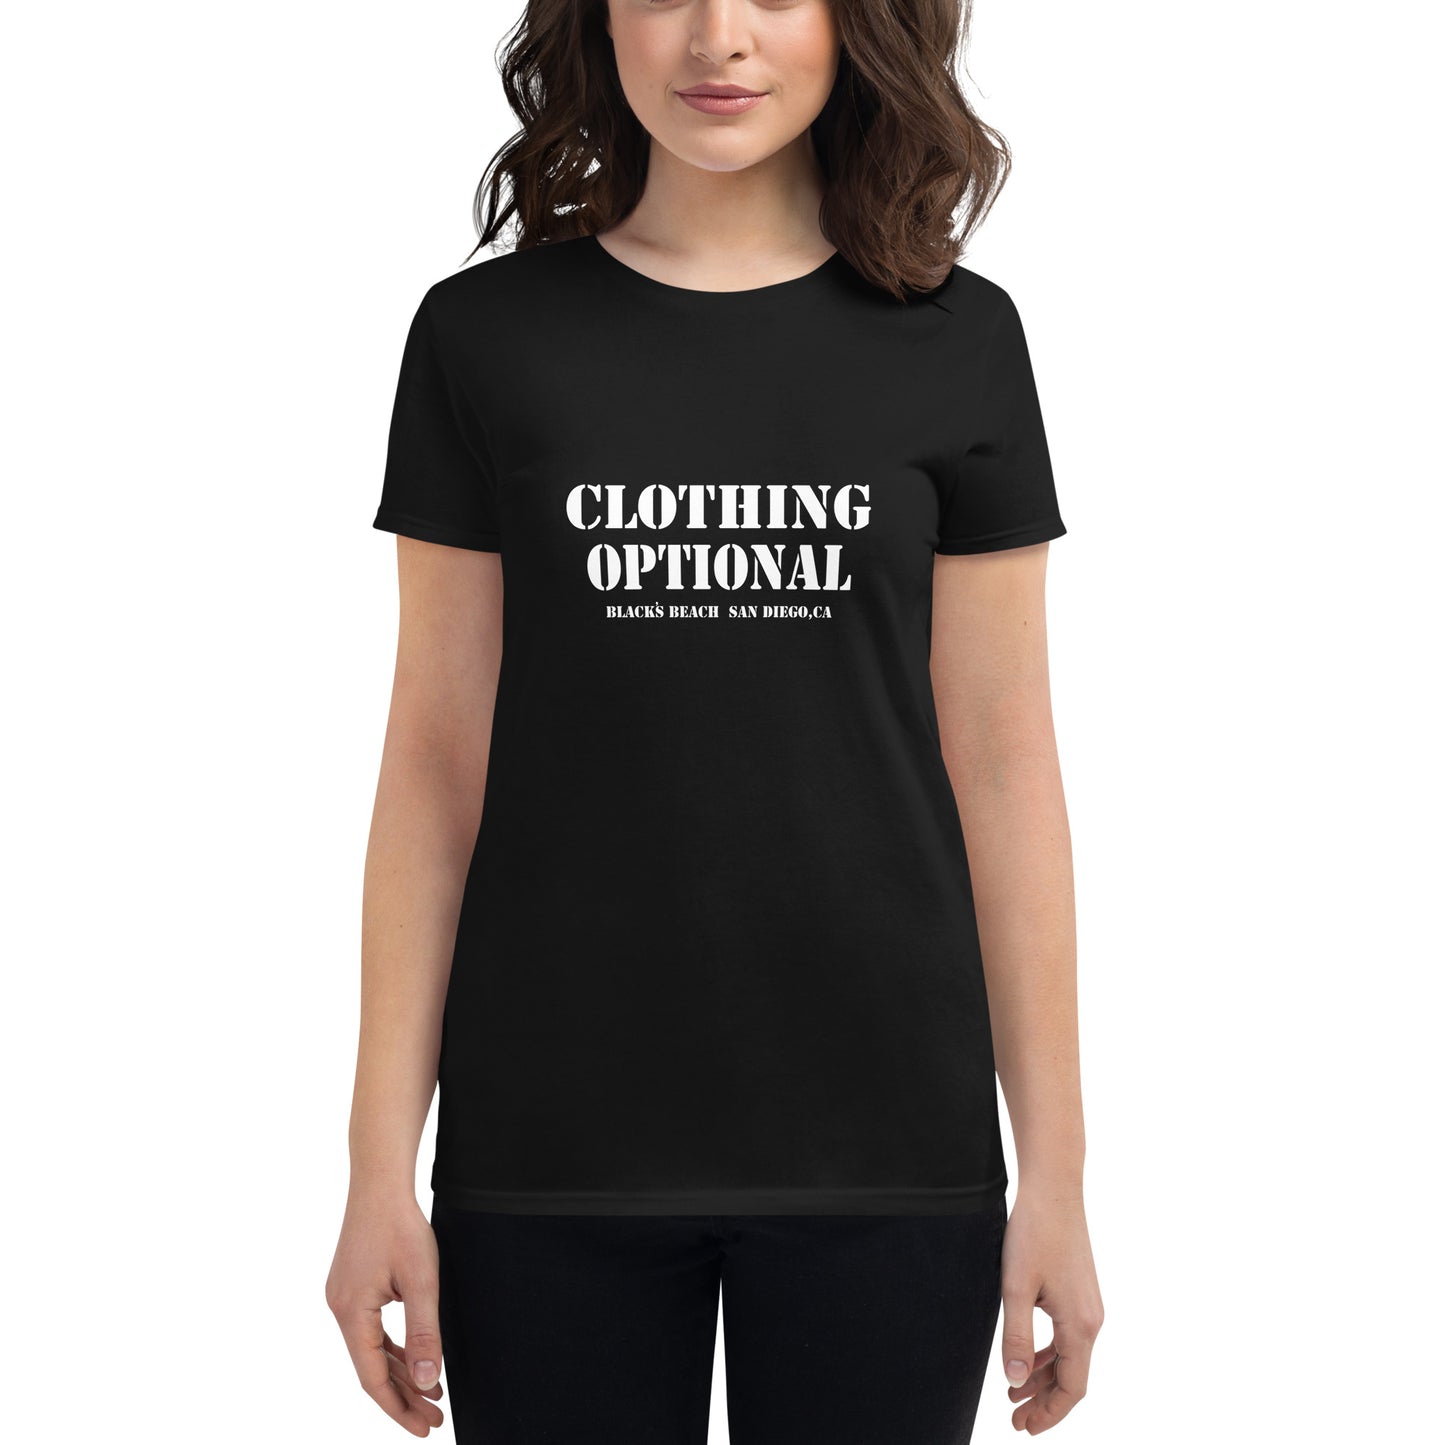 Black's Beach Tees / Style 24 / Women's short sleeve t-shirt